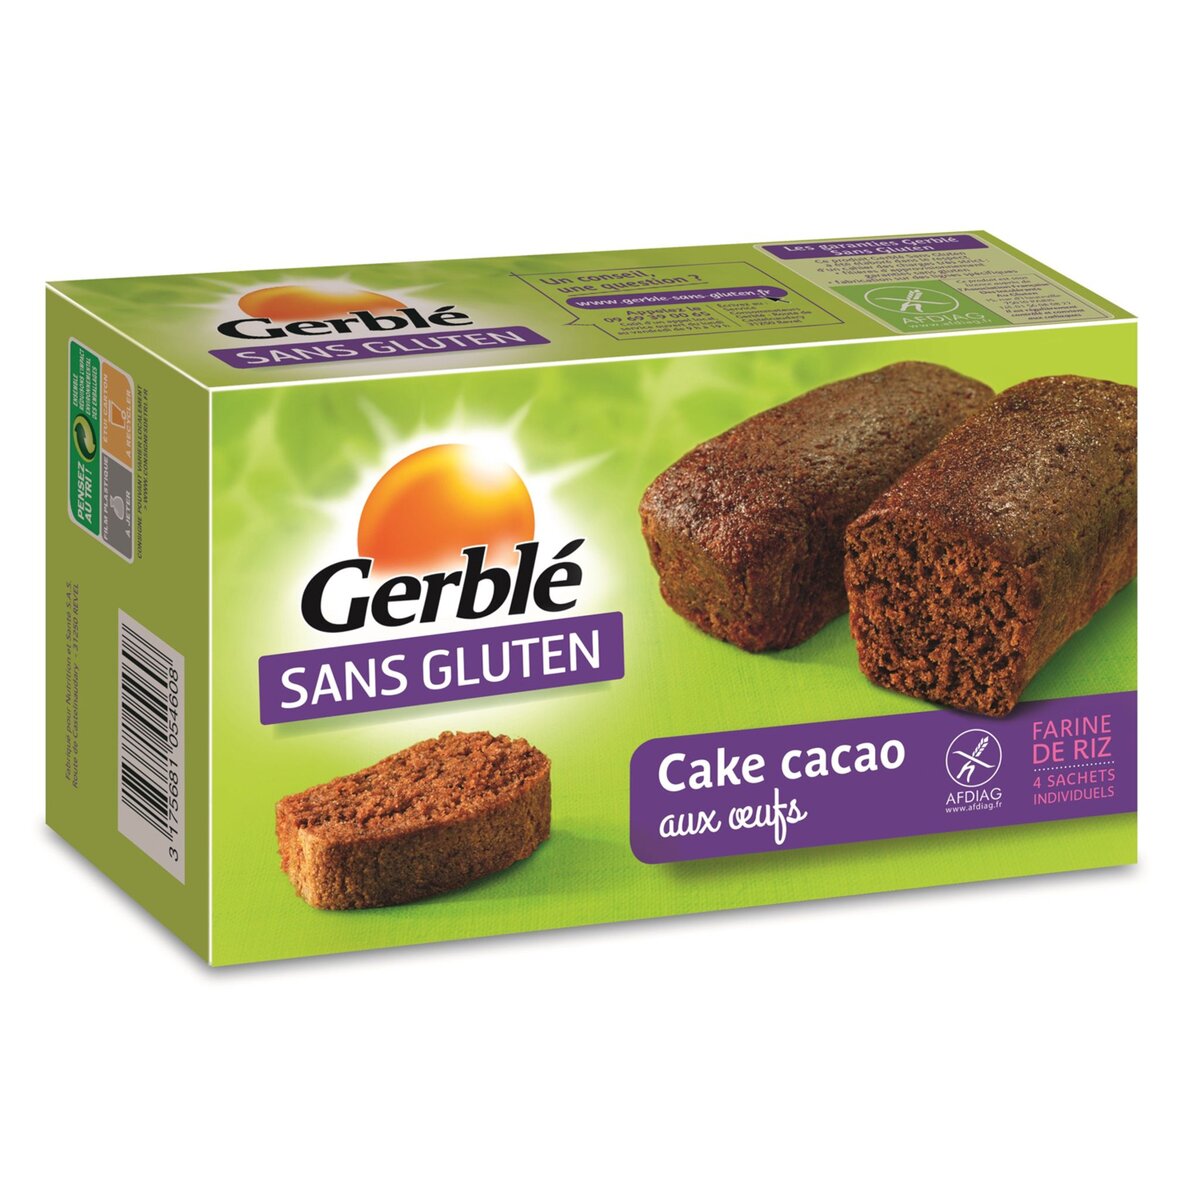 GERBLE Gerblé sans gluten cake cacao 180g